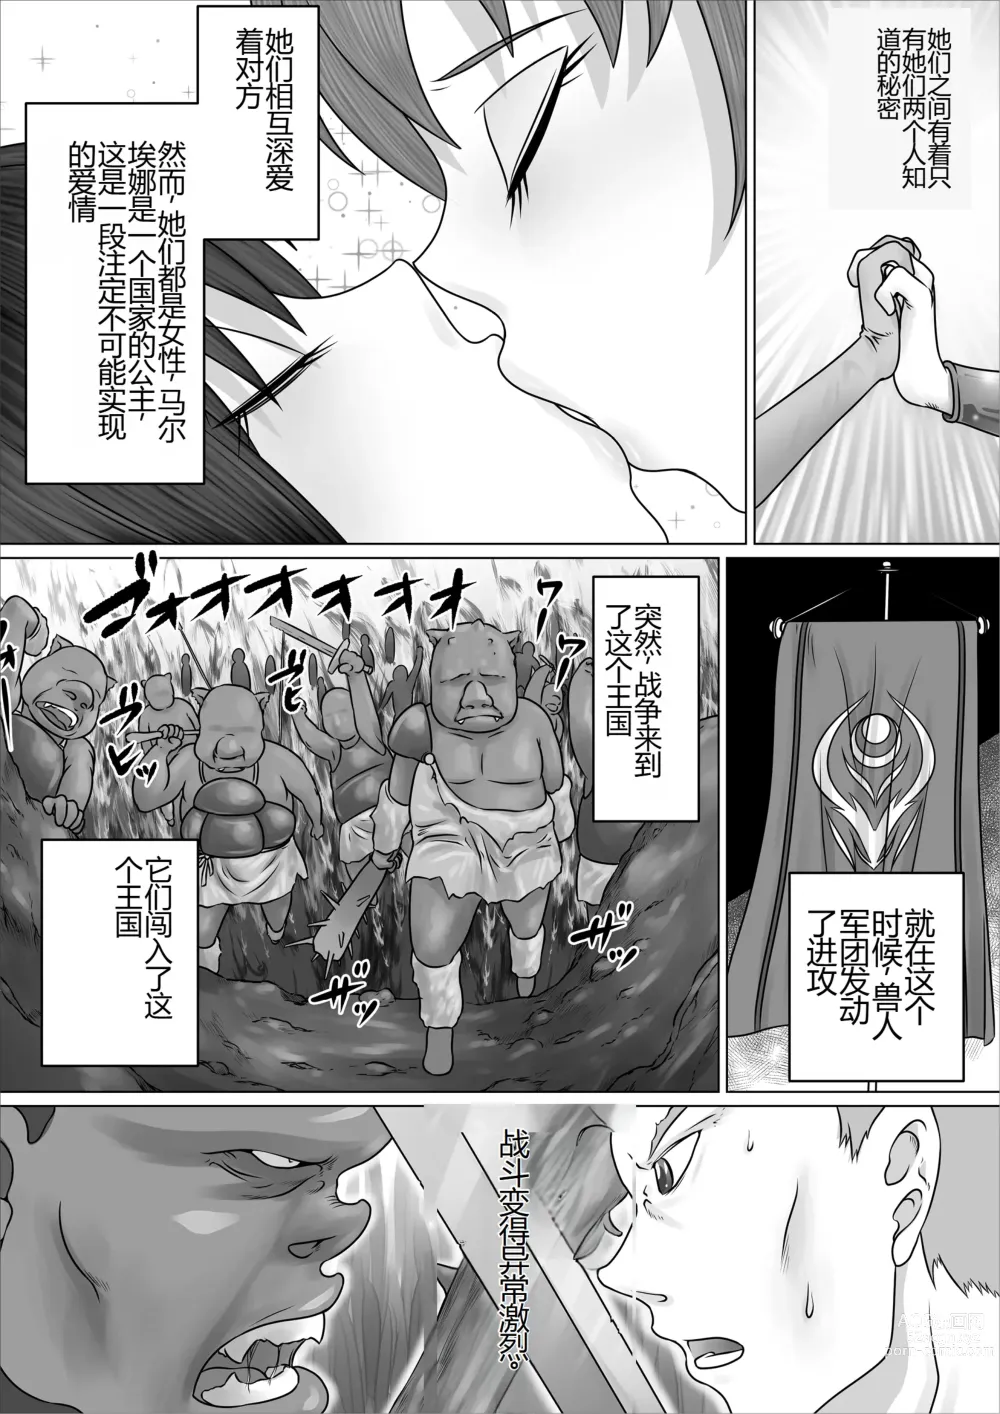 Page 4 of doujinshi 被誉为英雄的女战士长艾尔拉被改造成淫乱的母猪成为一生奉献做为配种精液便器的故事